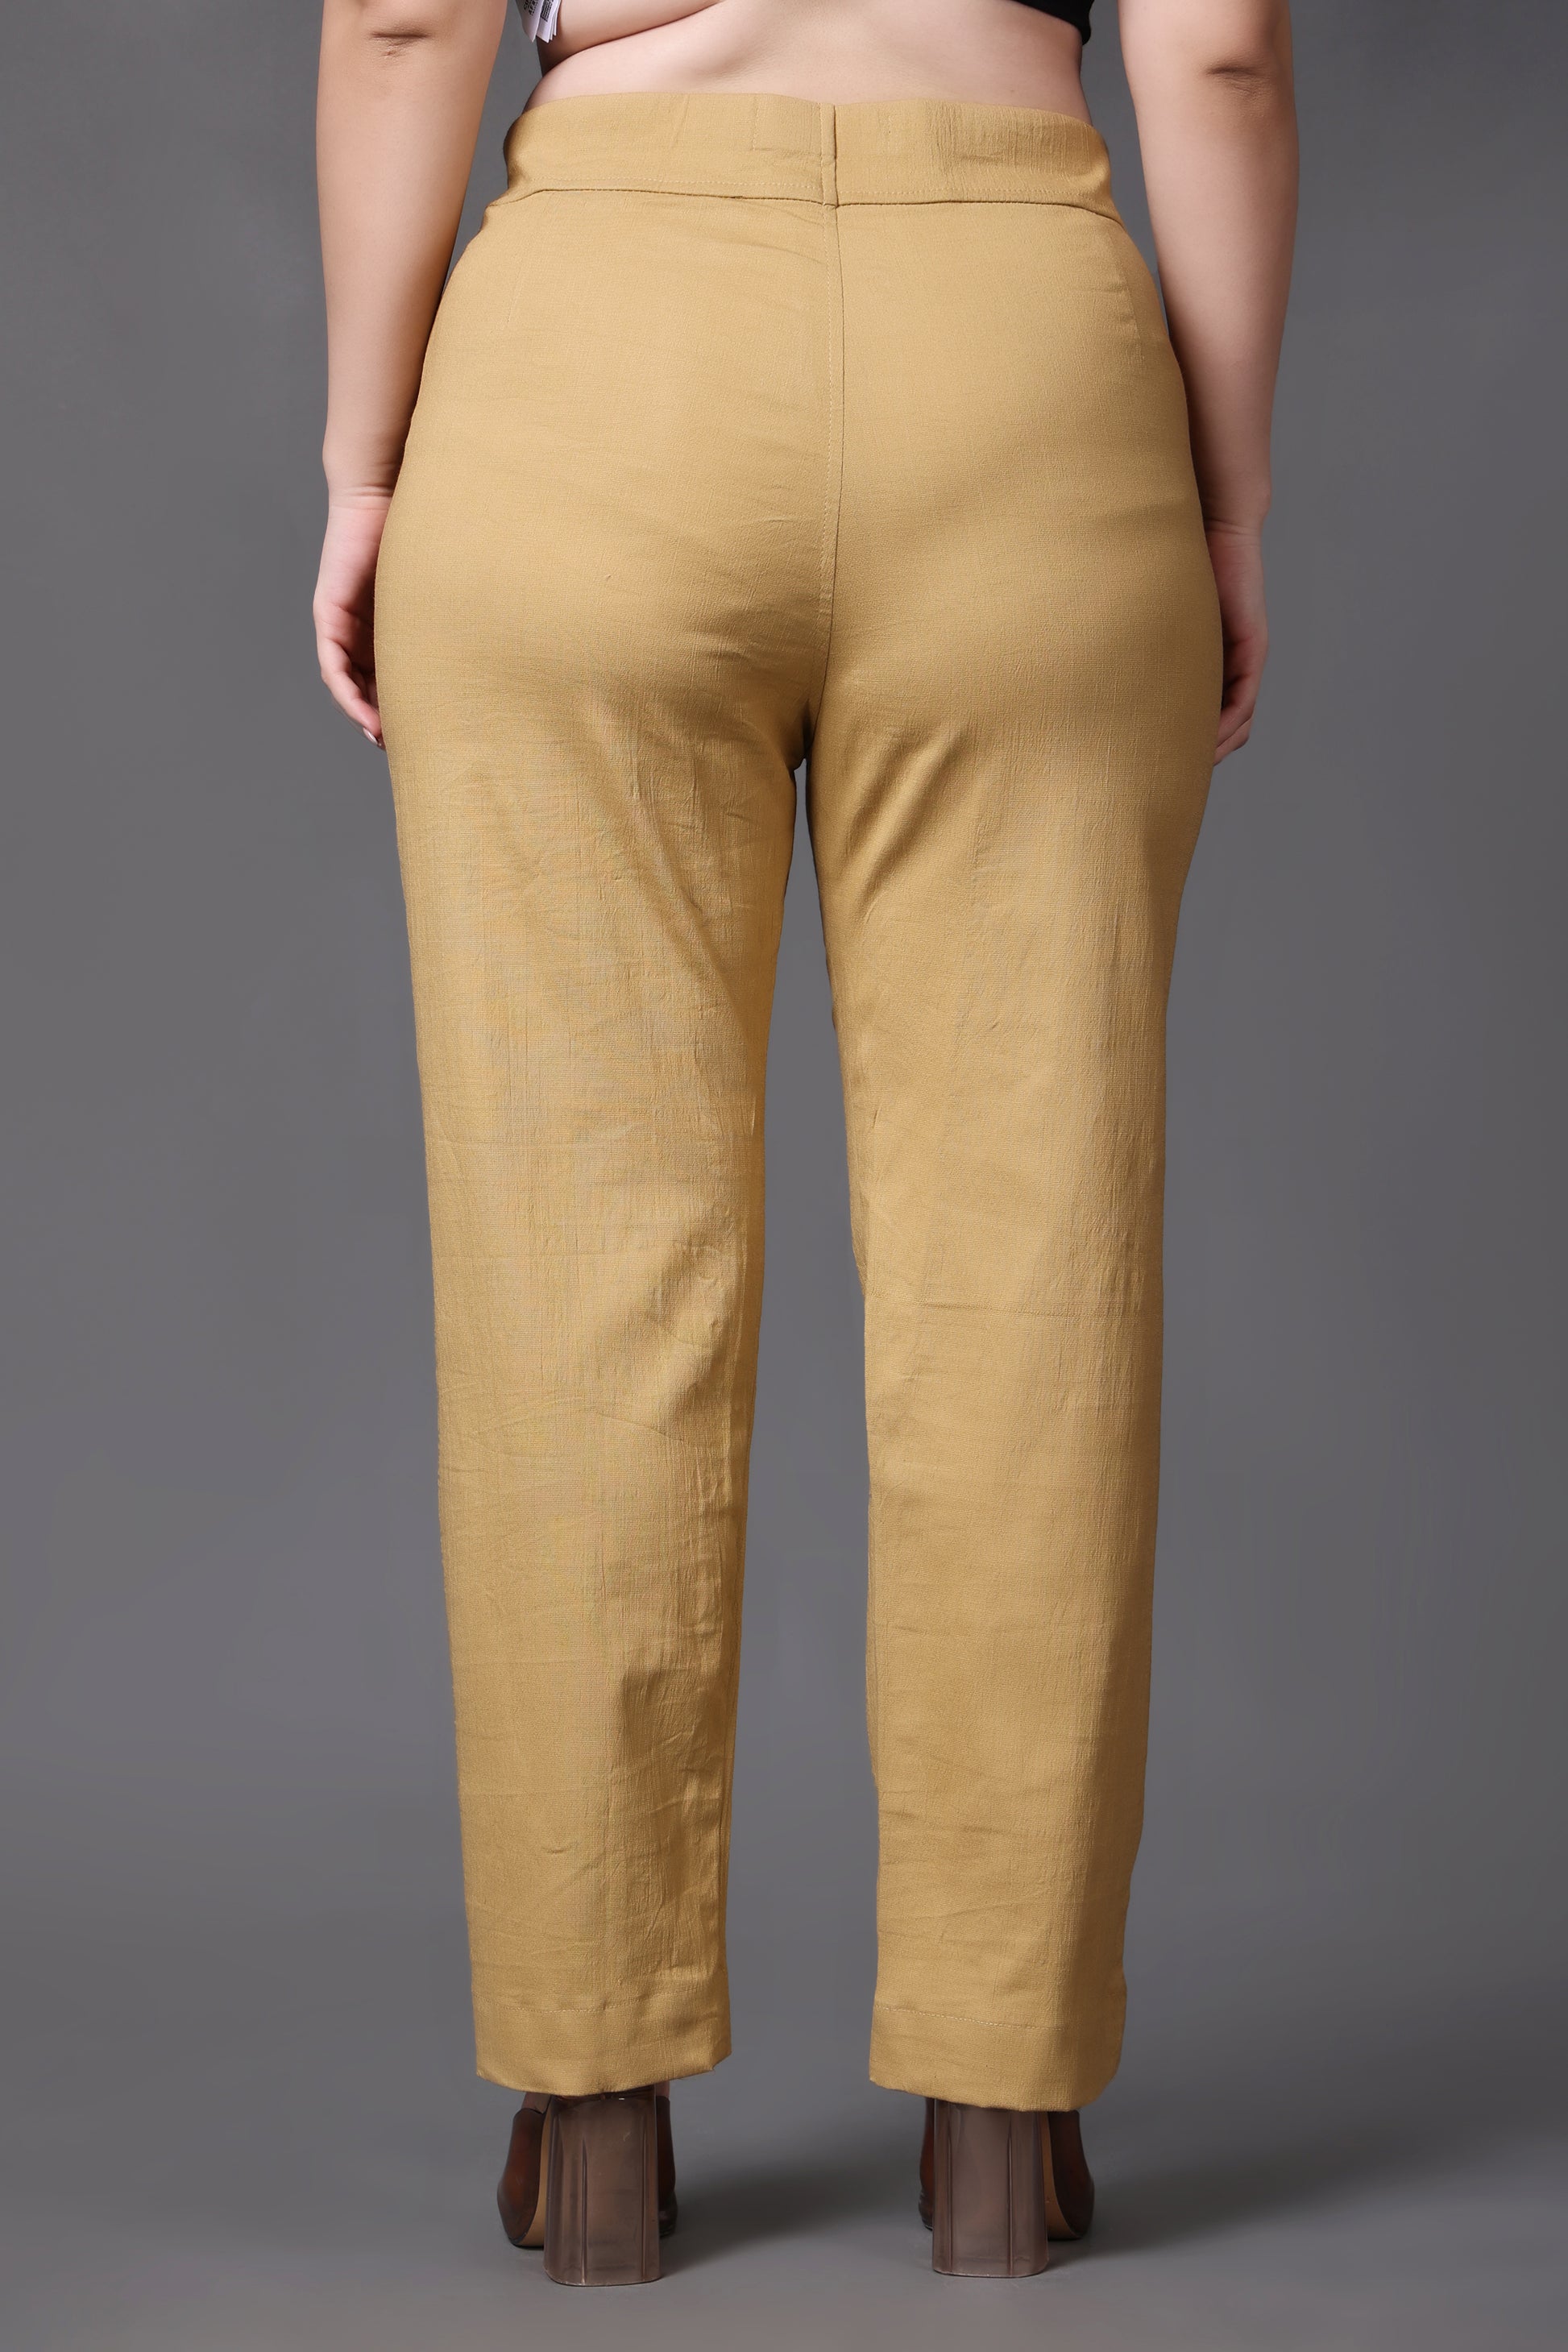 Lycra Formal Pants